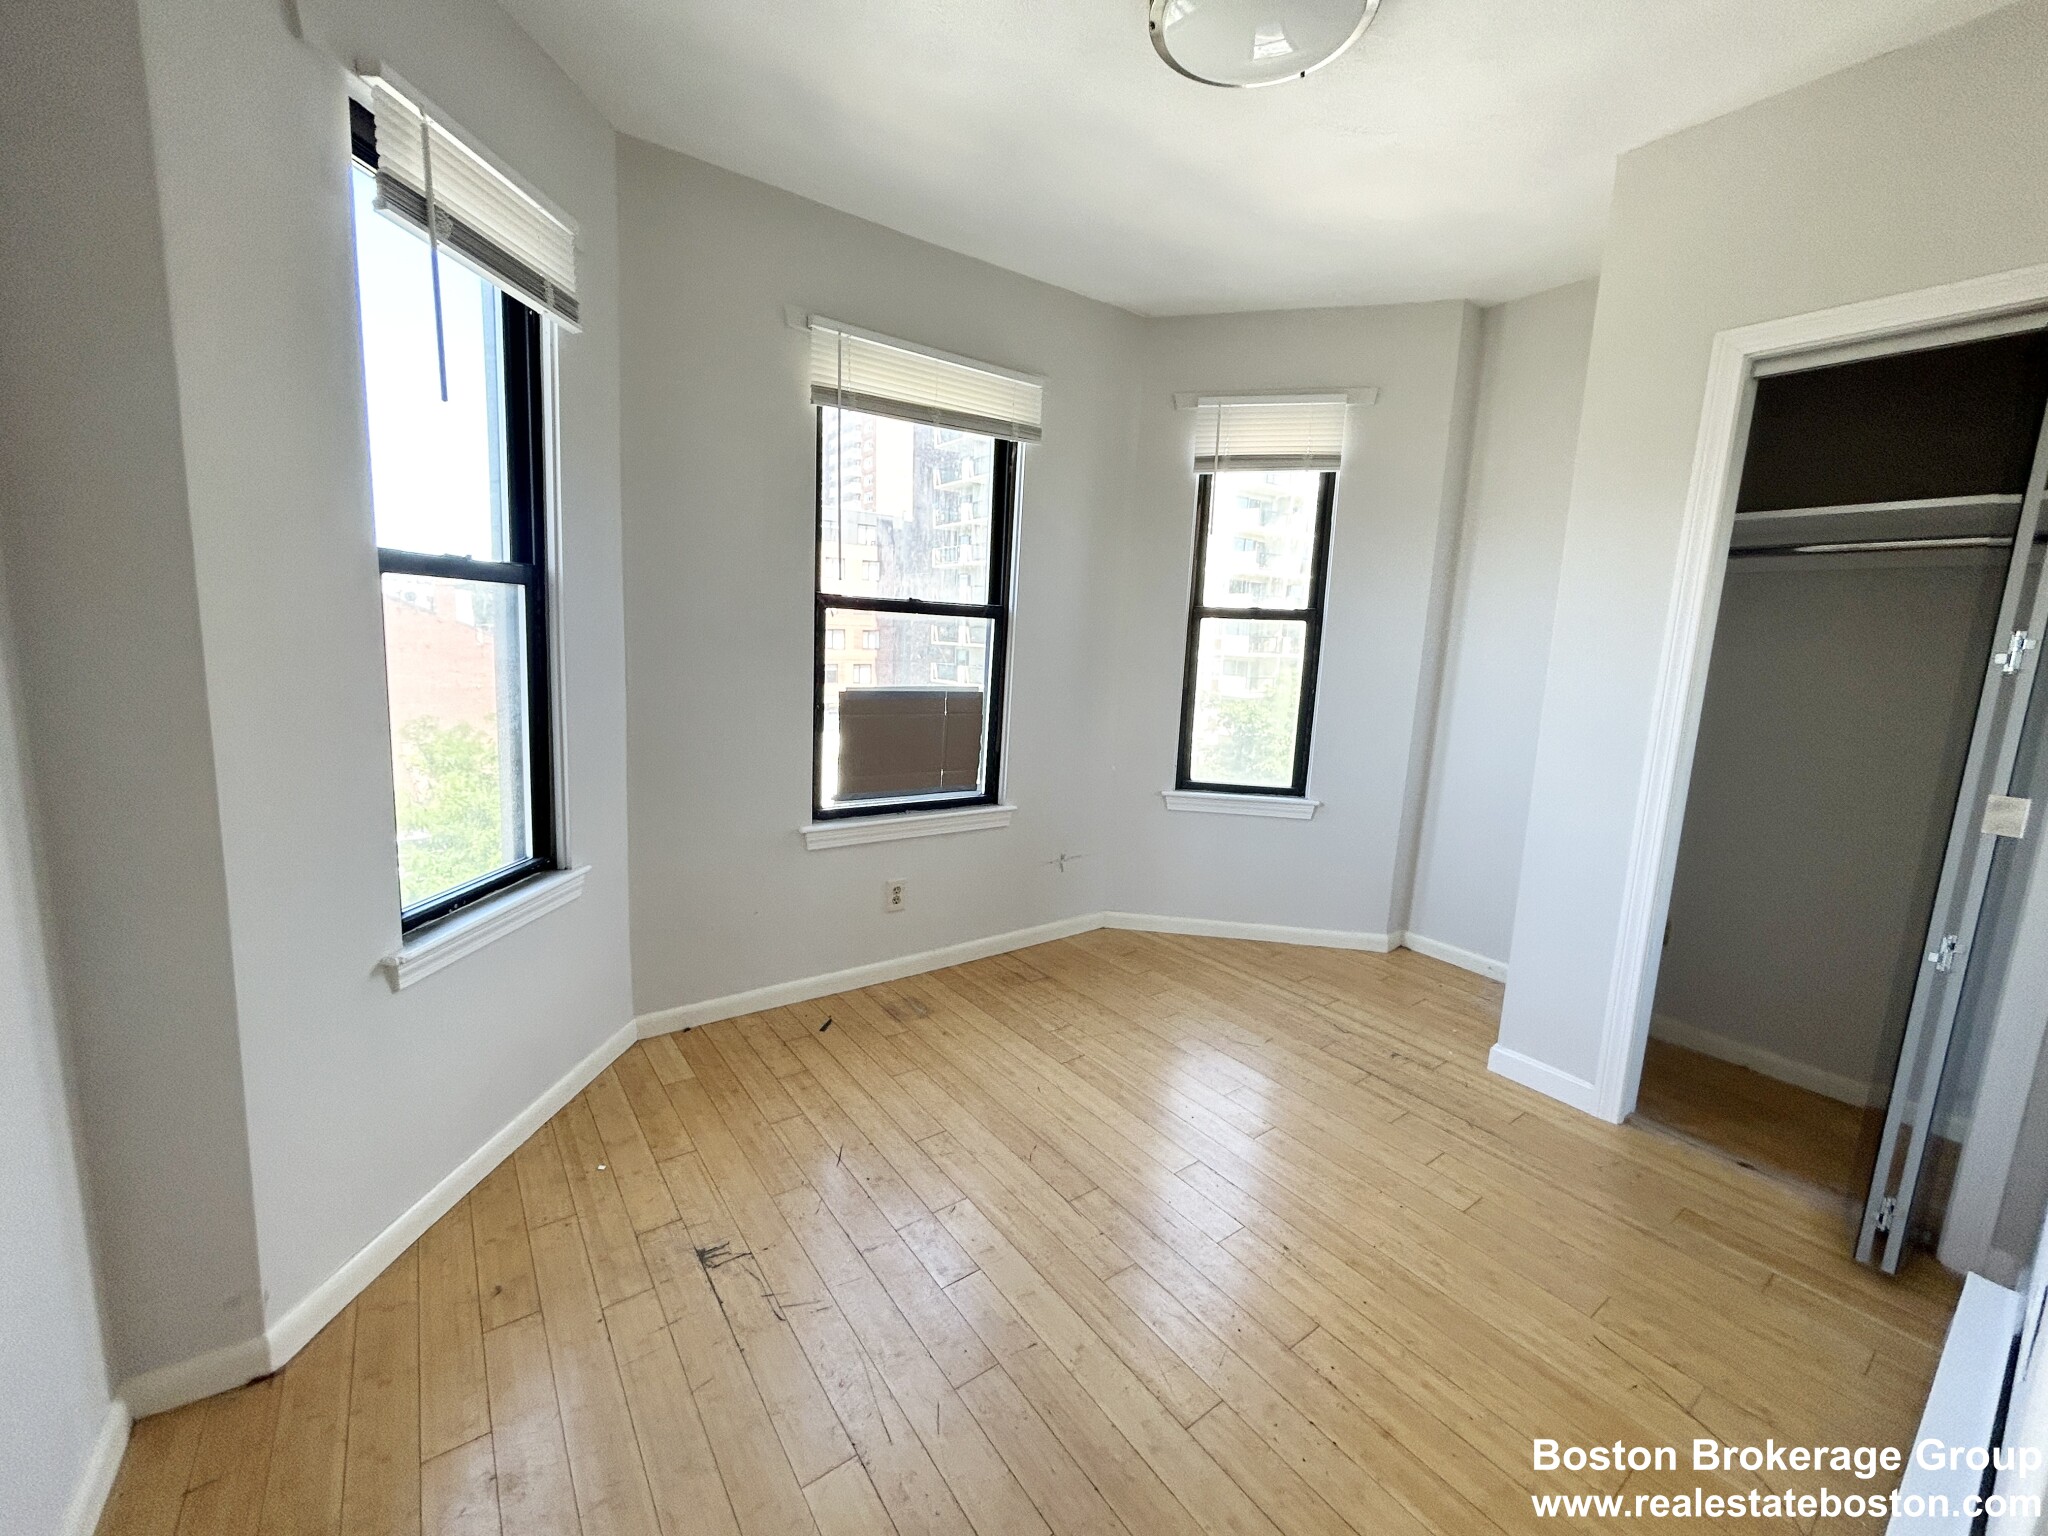 Photos of apartment on Tremont St.,Boston MA 02120